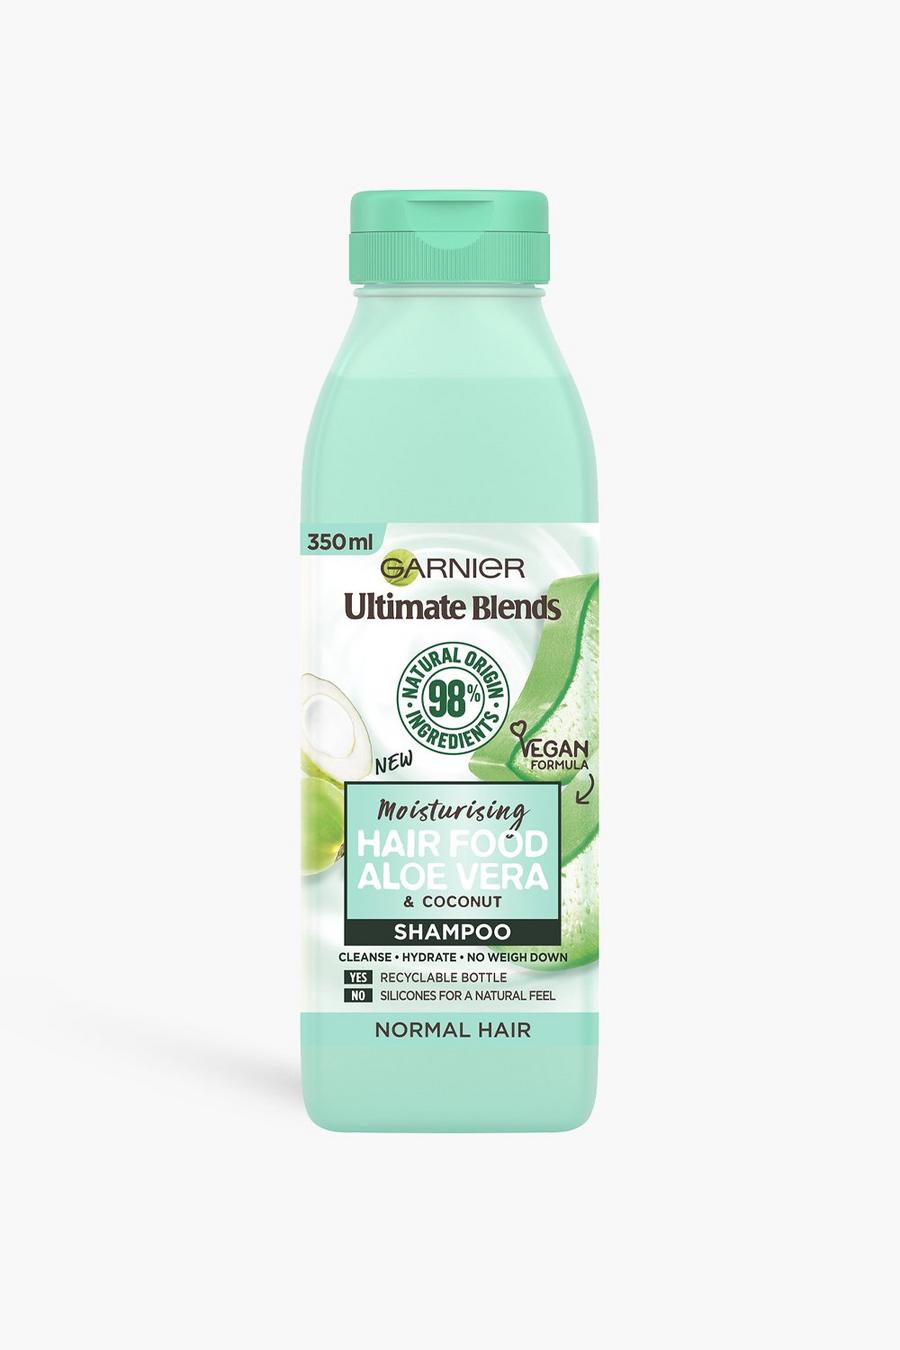 Green Garnier Ultimate Blends Aloe Vera Shampoo